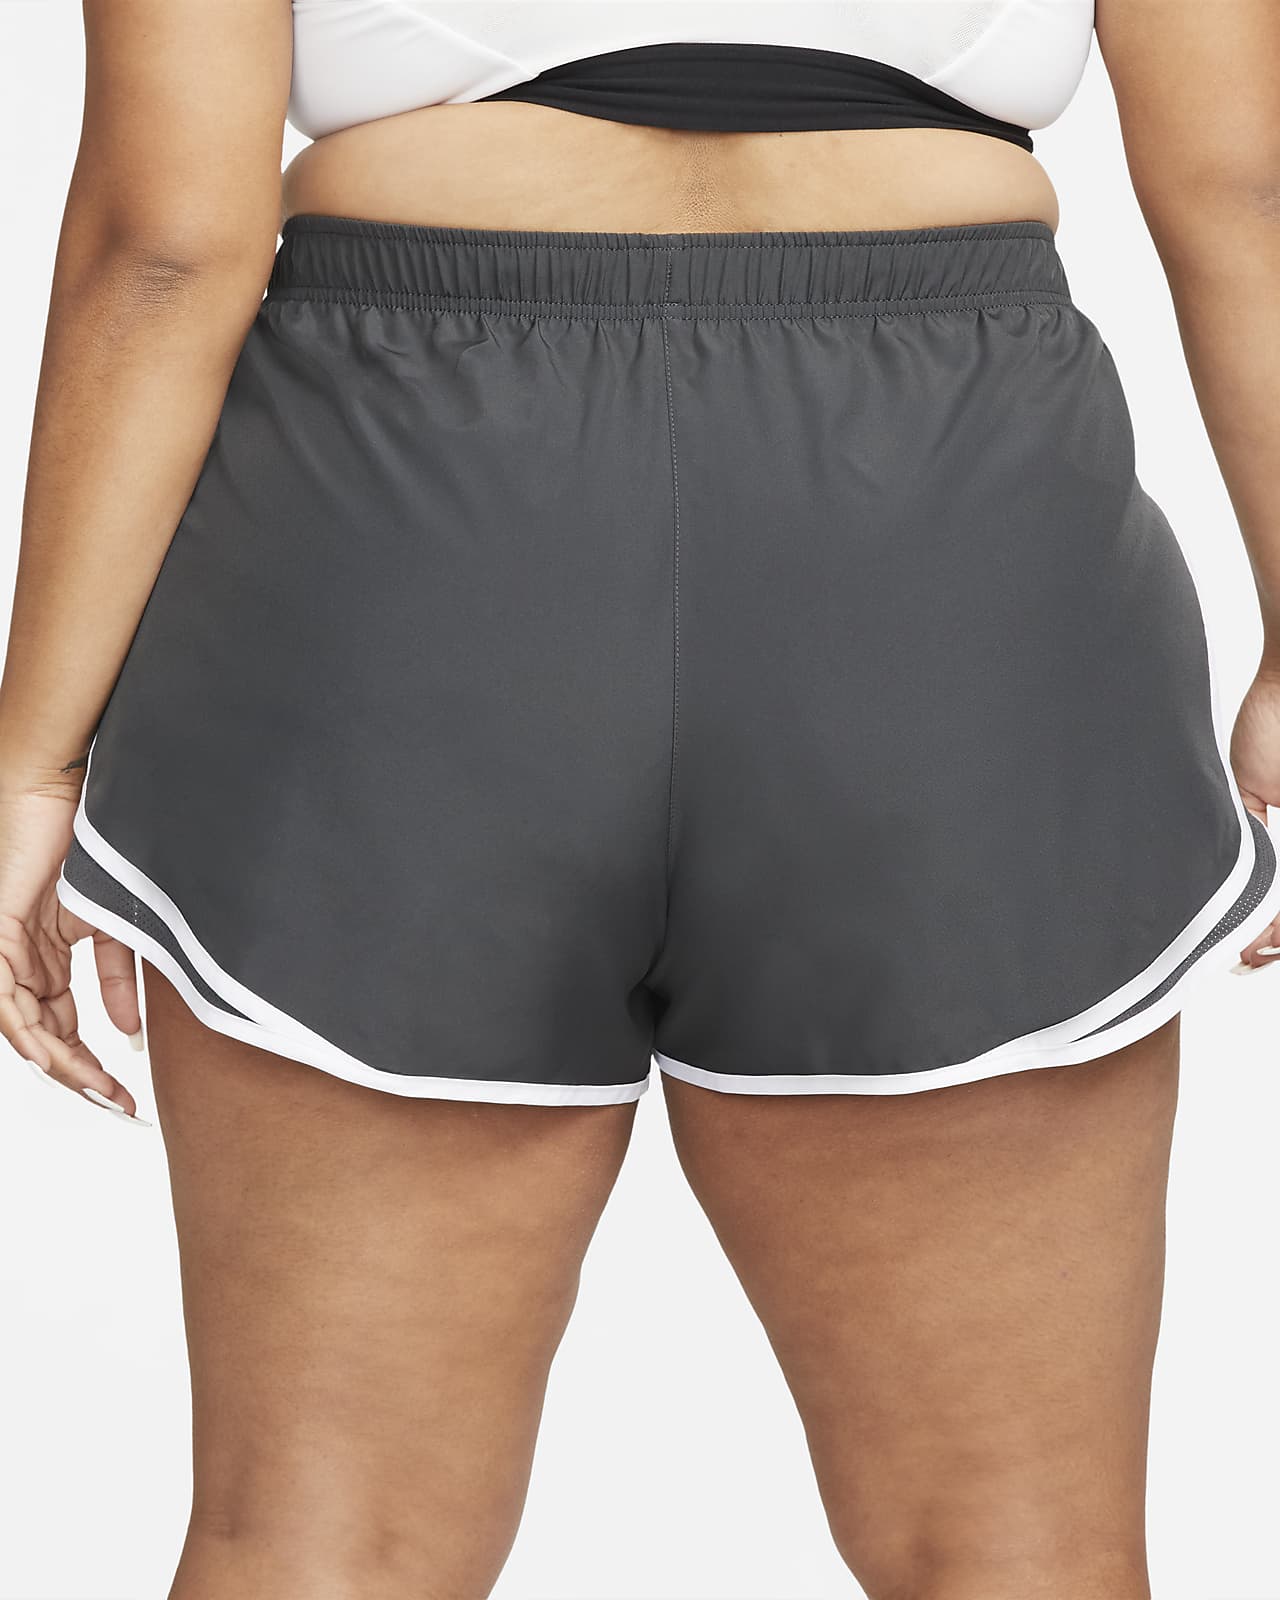 Nike Women's Tempo Shorts for just $17.99 shipped! Reg. $35!